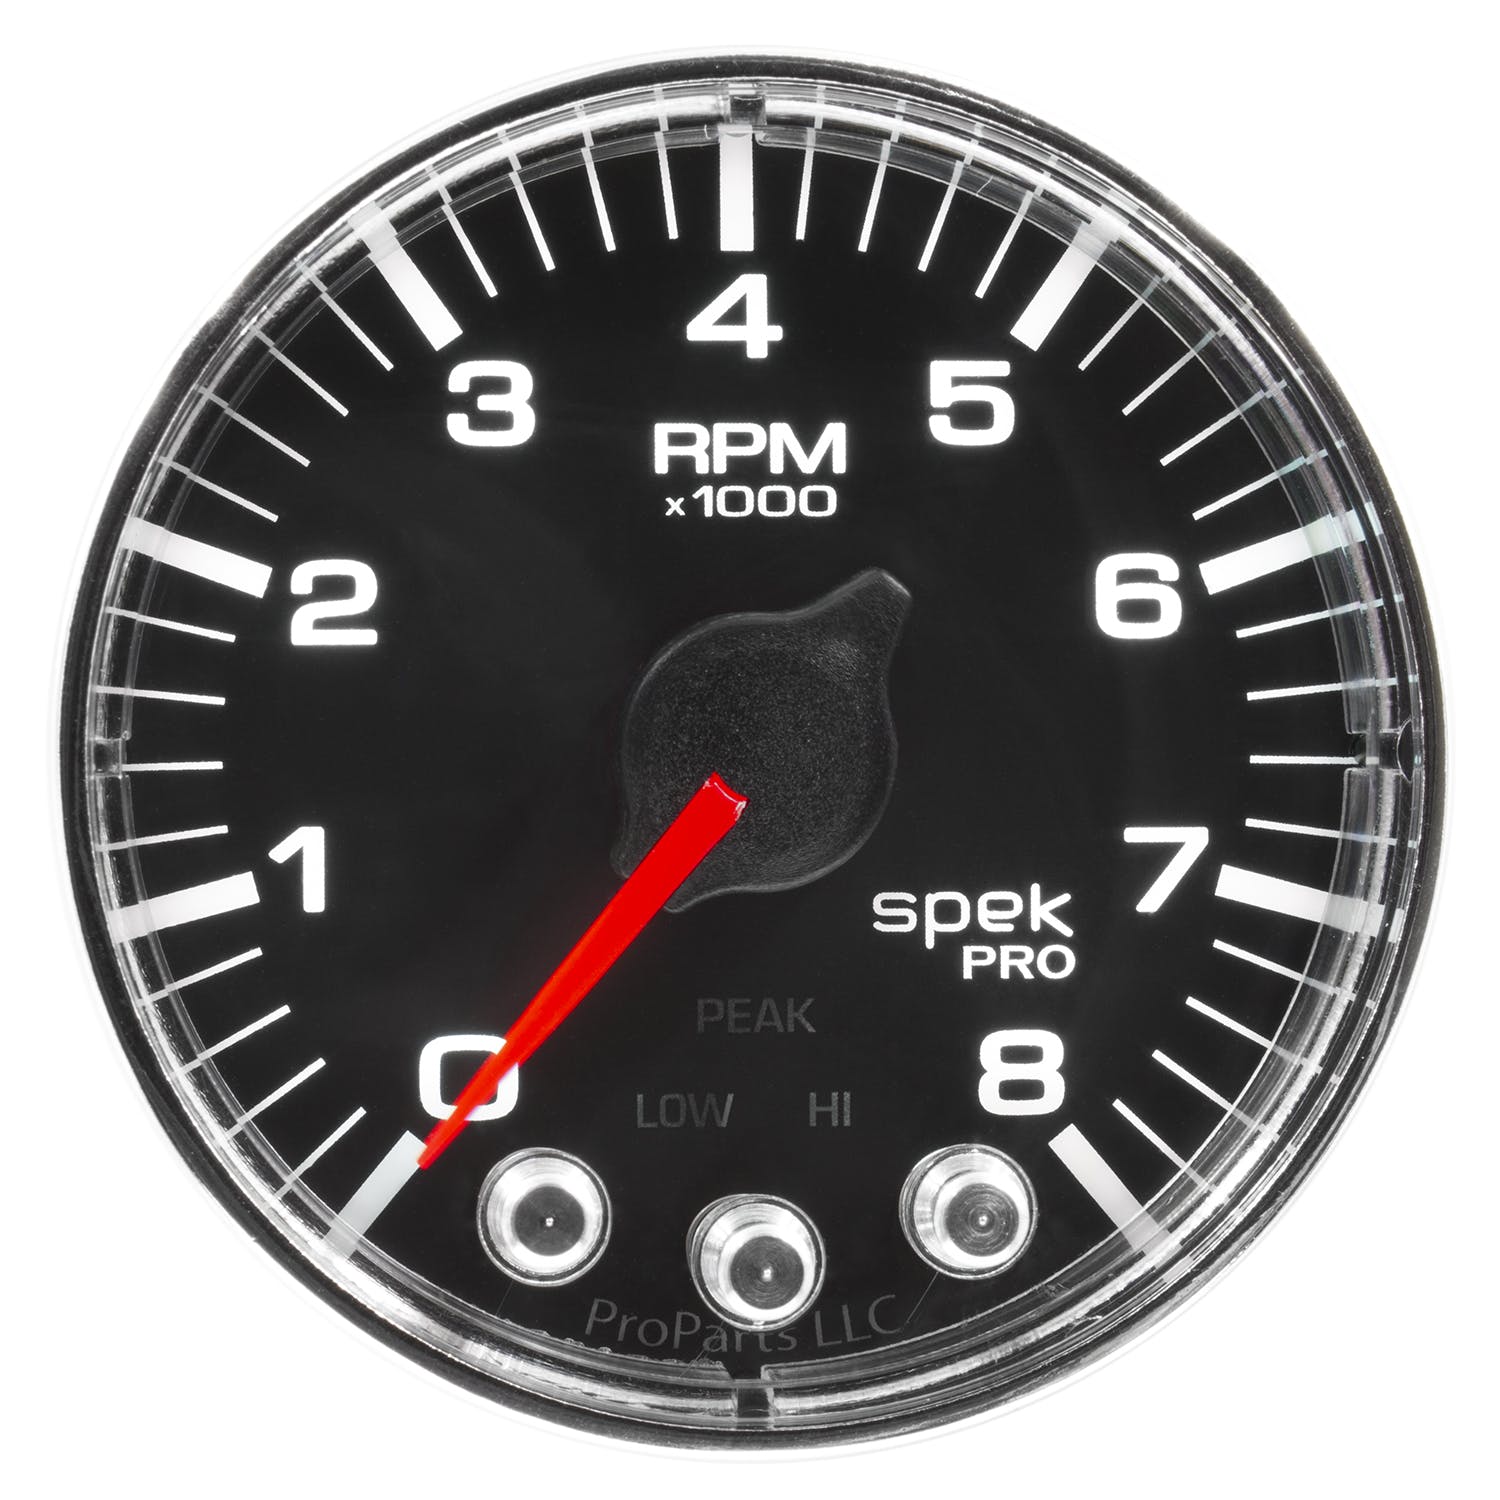 AutoMeter Products P334318 Tach 2in. 8k RPM w Shift Light/Pk Mem Blk/Chrm Spek